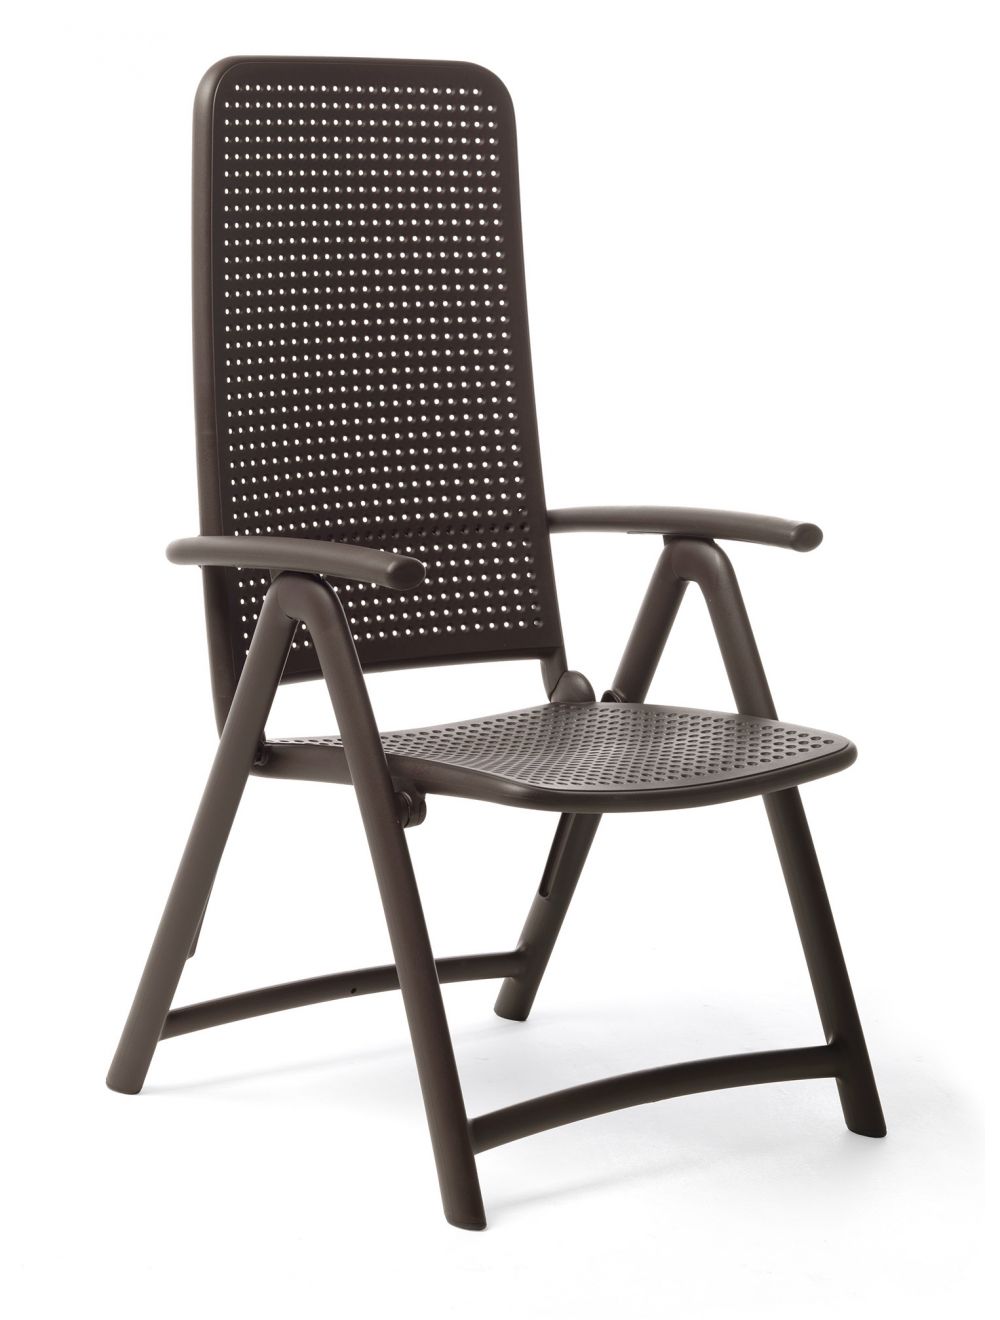 Darsena Garden Nardi Online Shop ArmGarden Chair